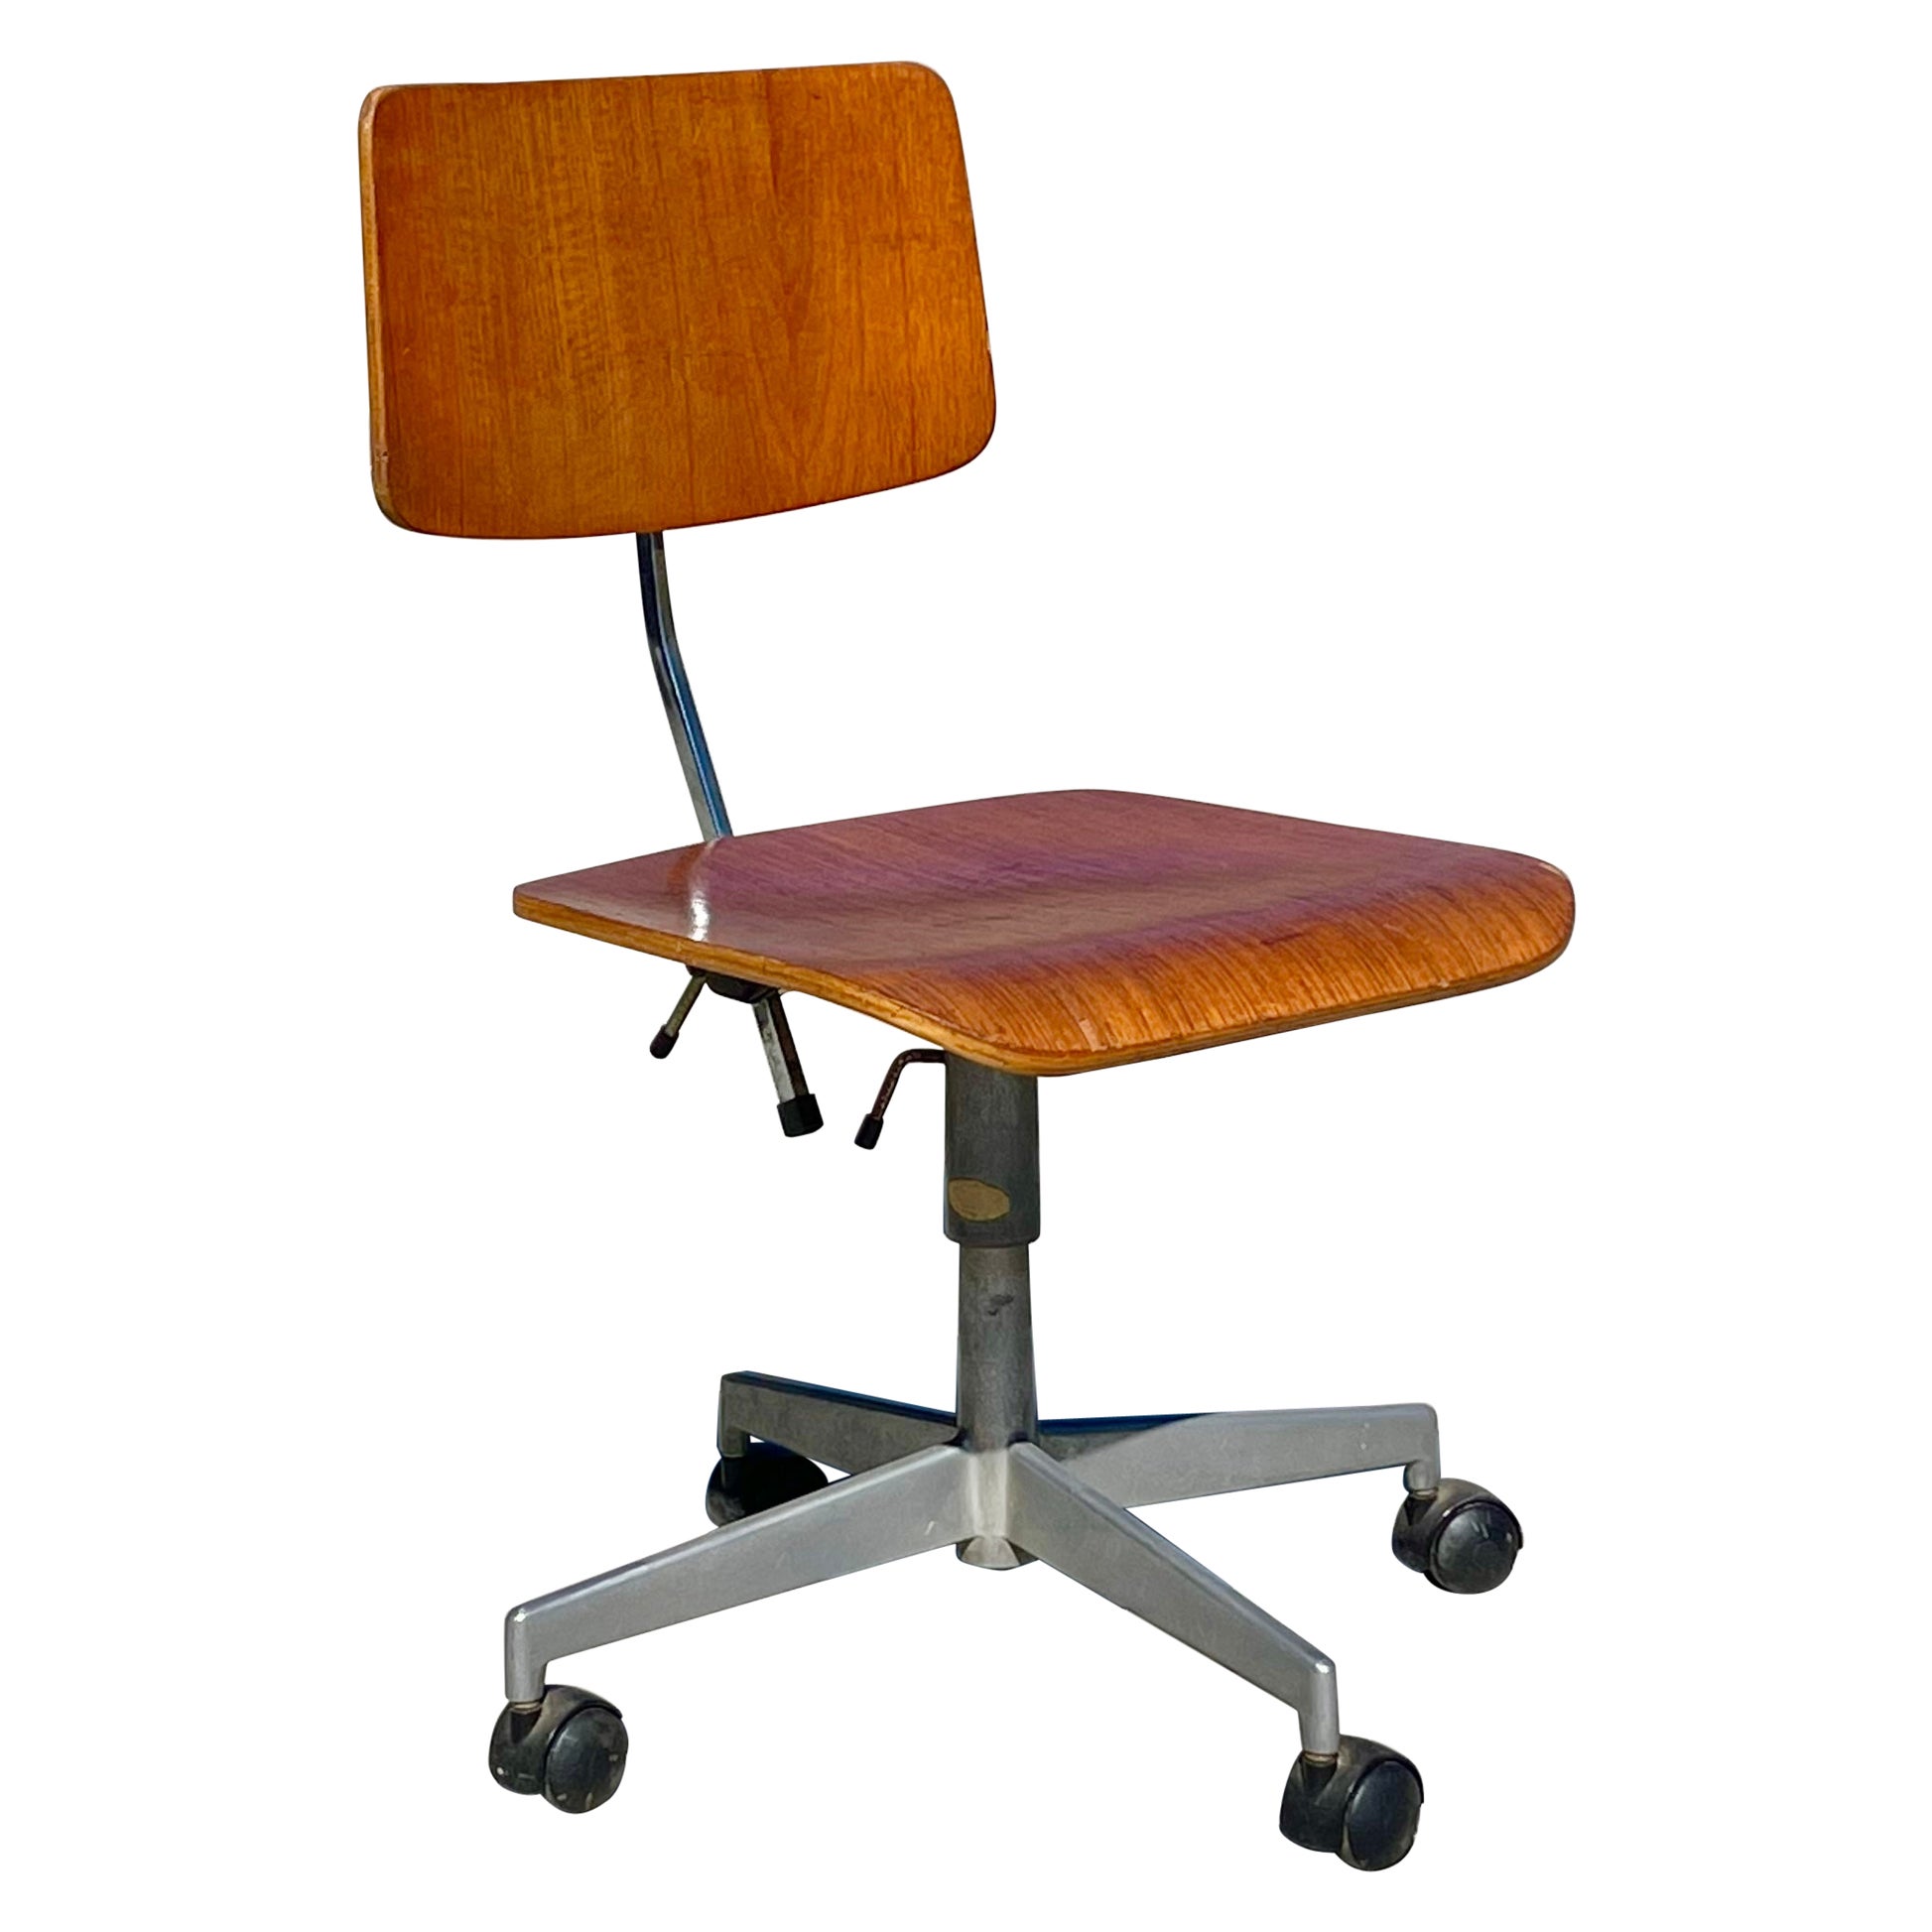 1950s Mid Century Modern Office Chair by Jorge Rasmussen